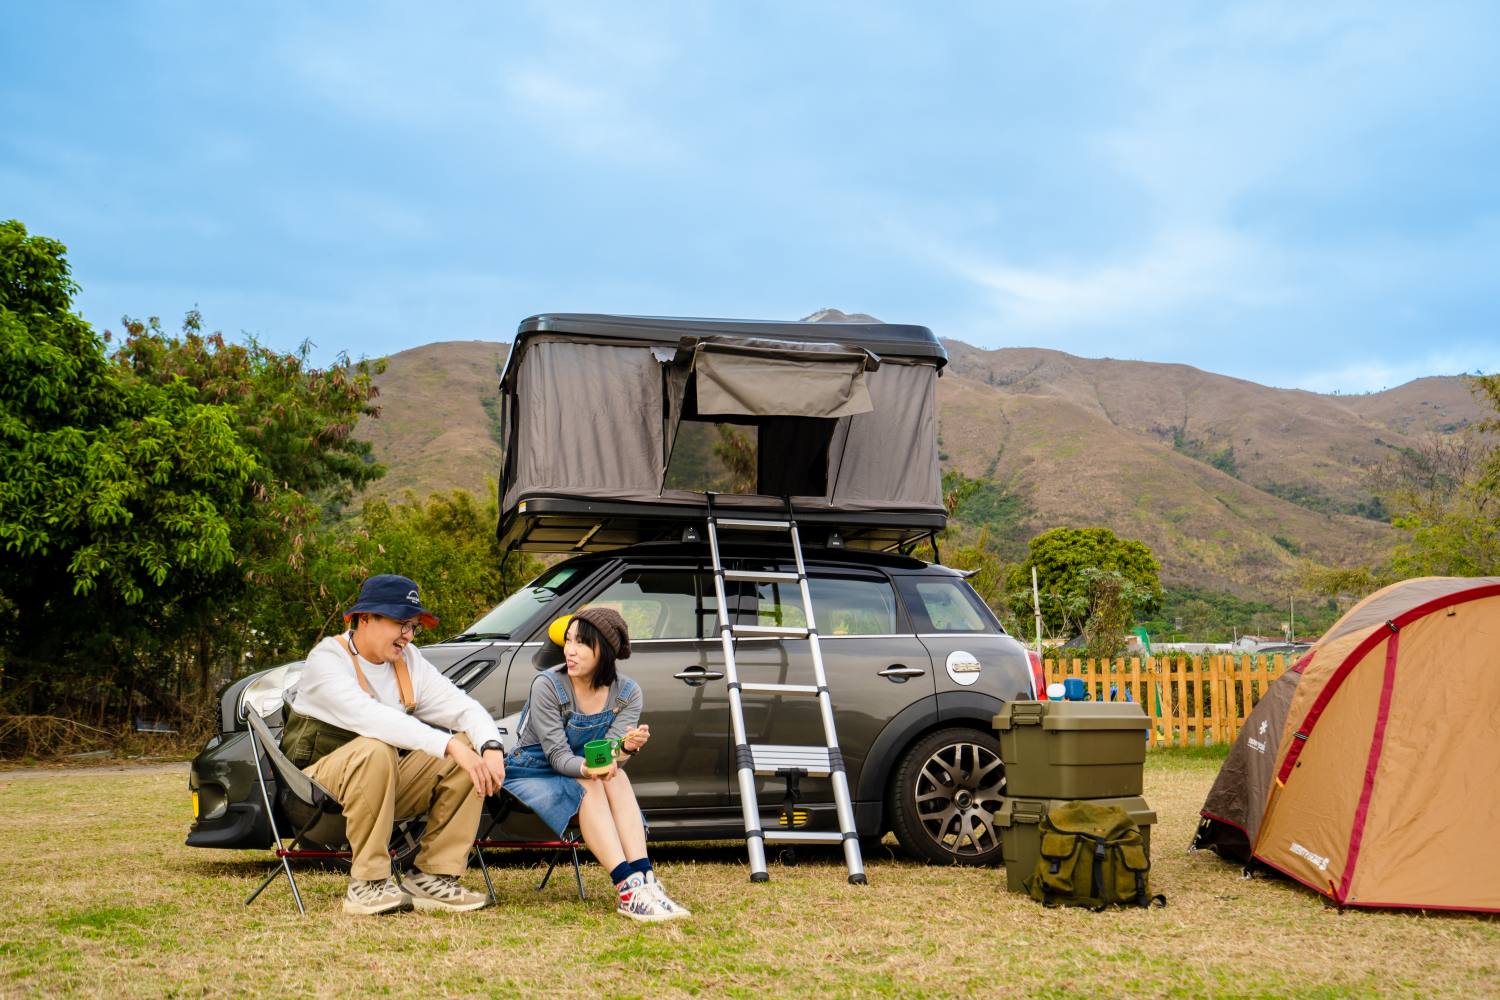 Holimood - 【少女夢想情車】Mini Cooper車頂營連汽車露營營位體驗